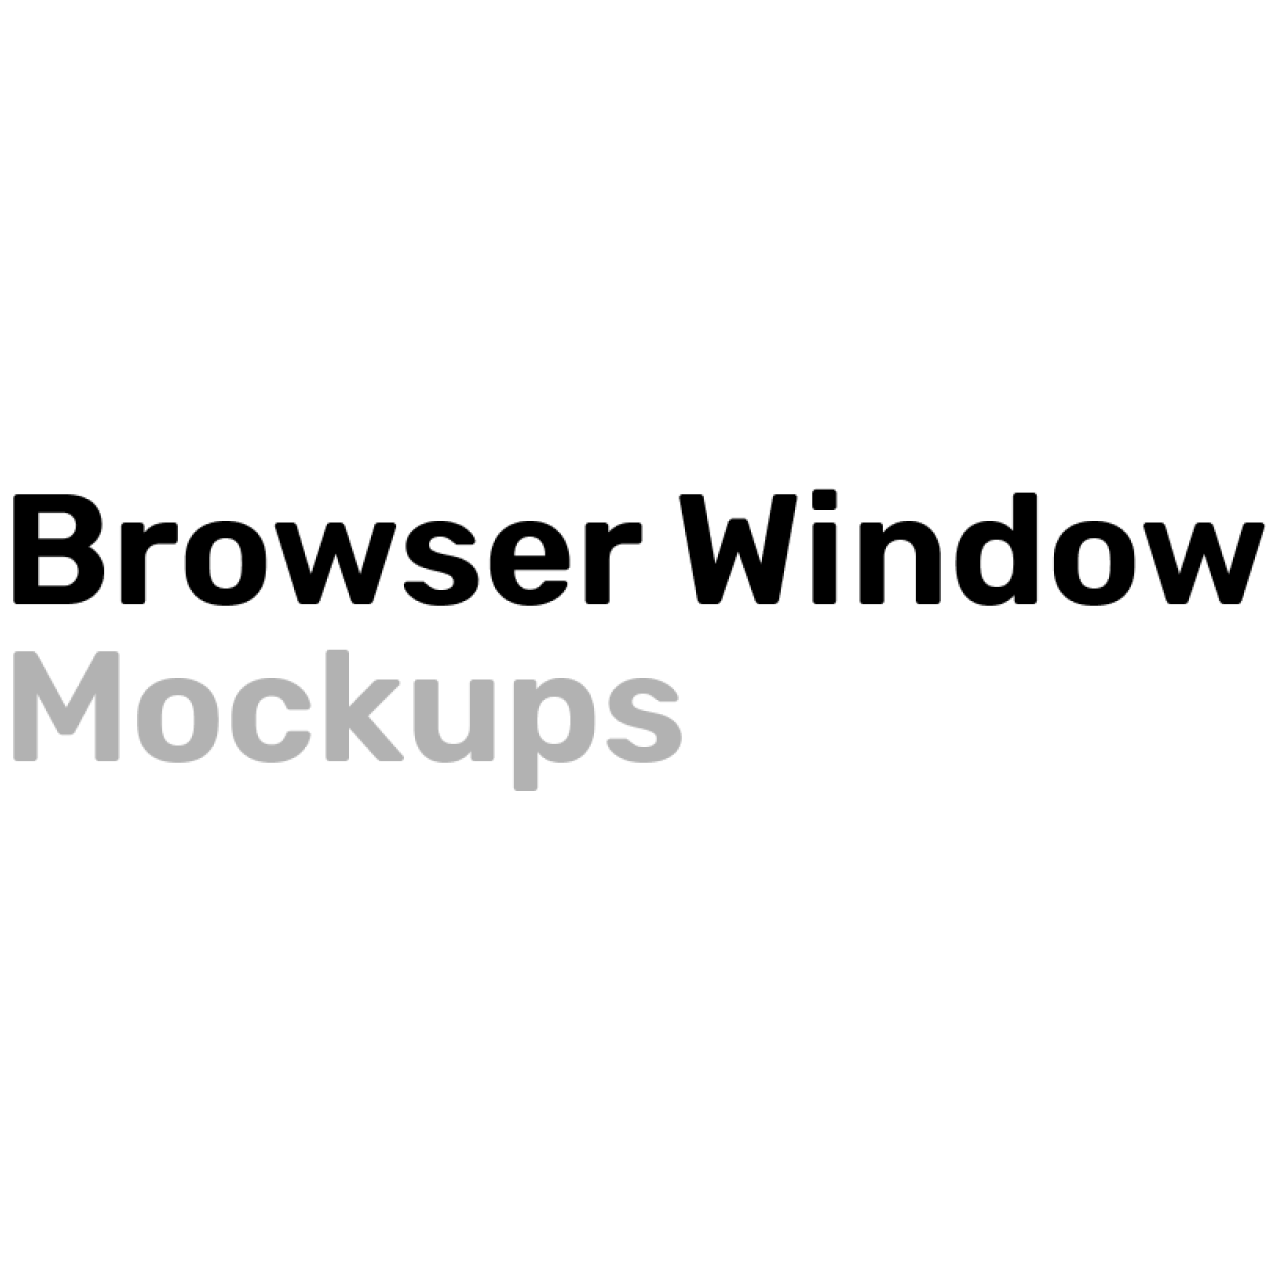 Browser Window Mockups (2)